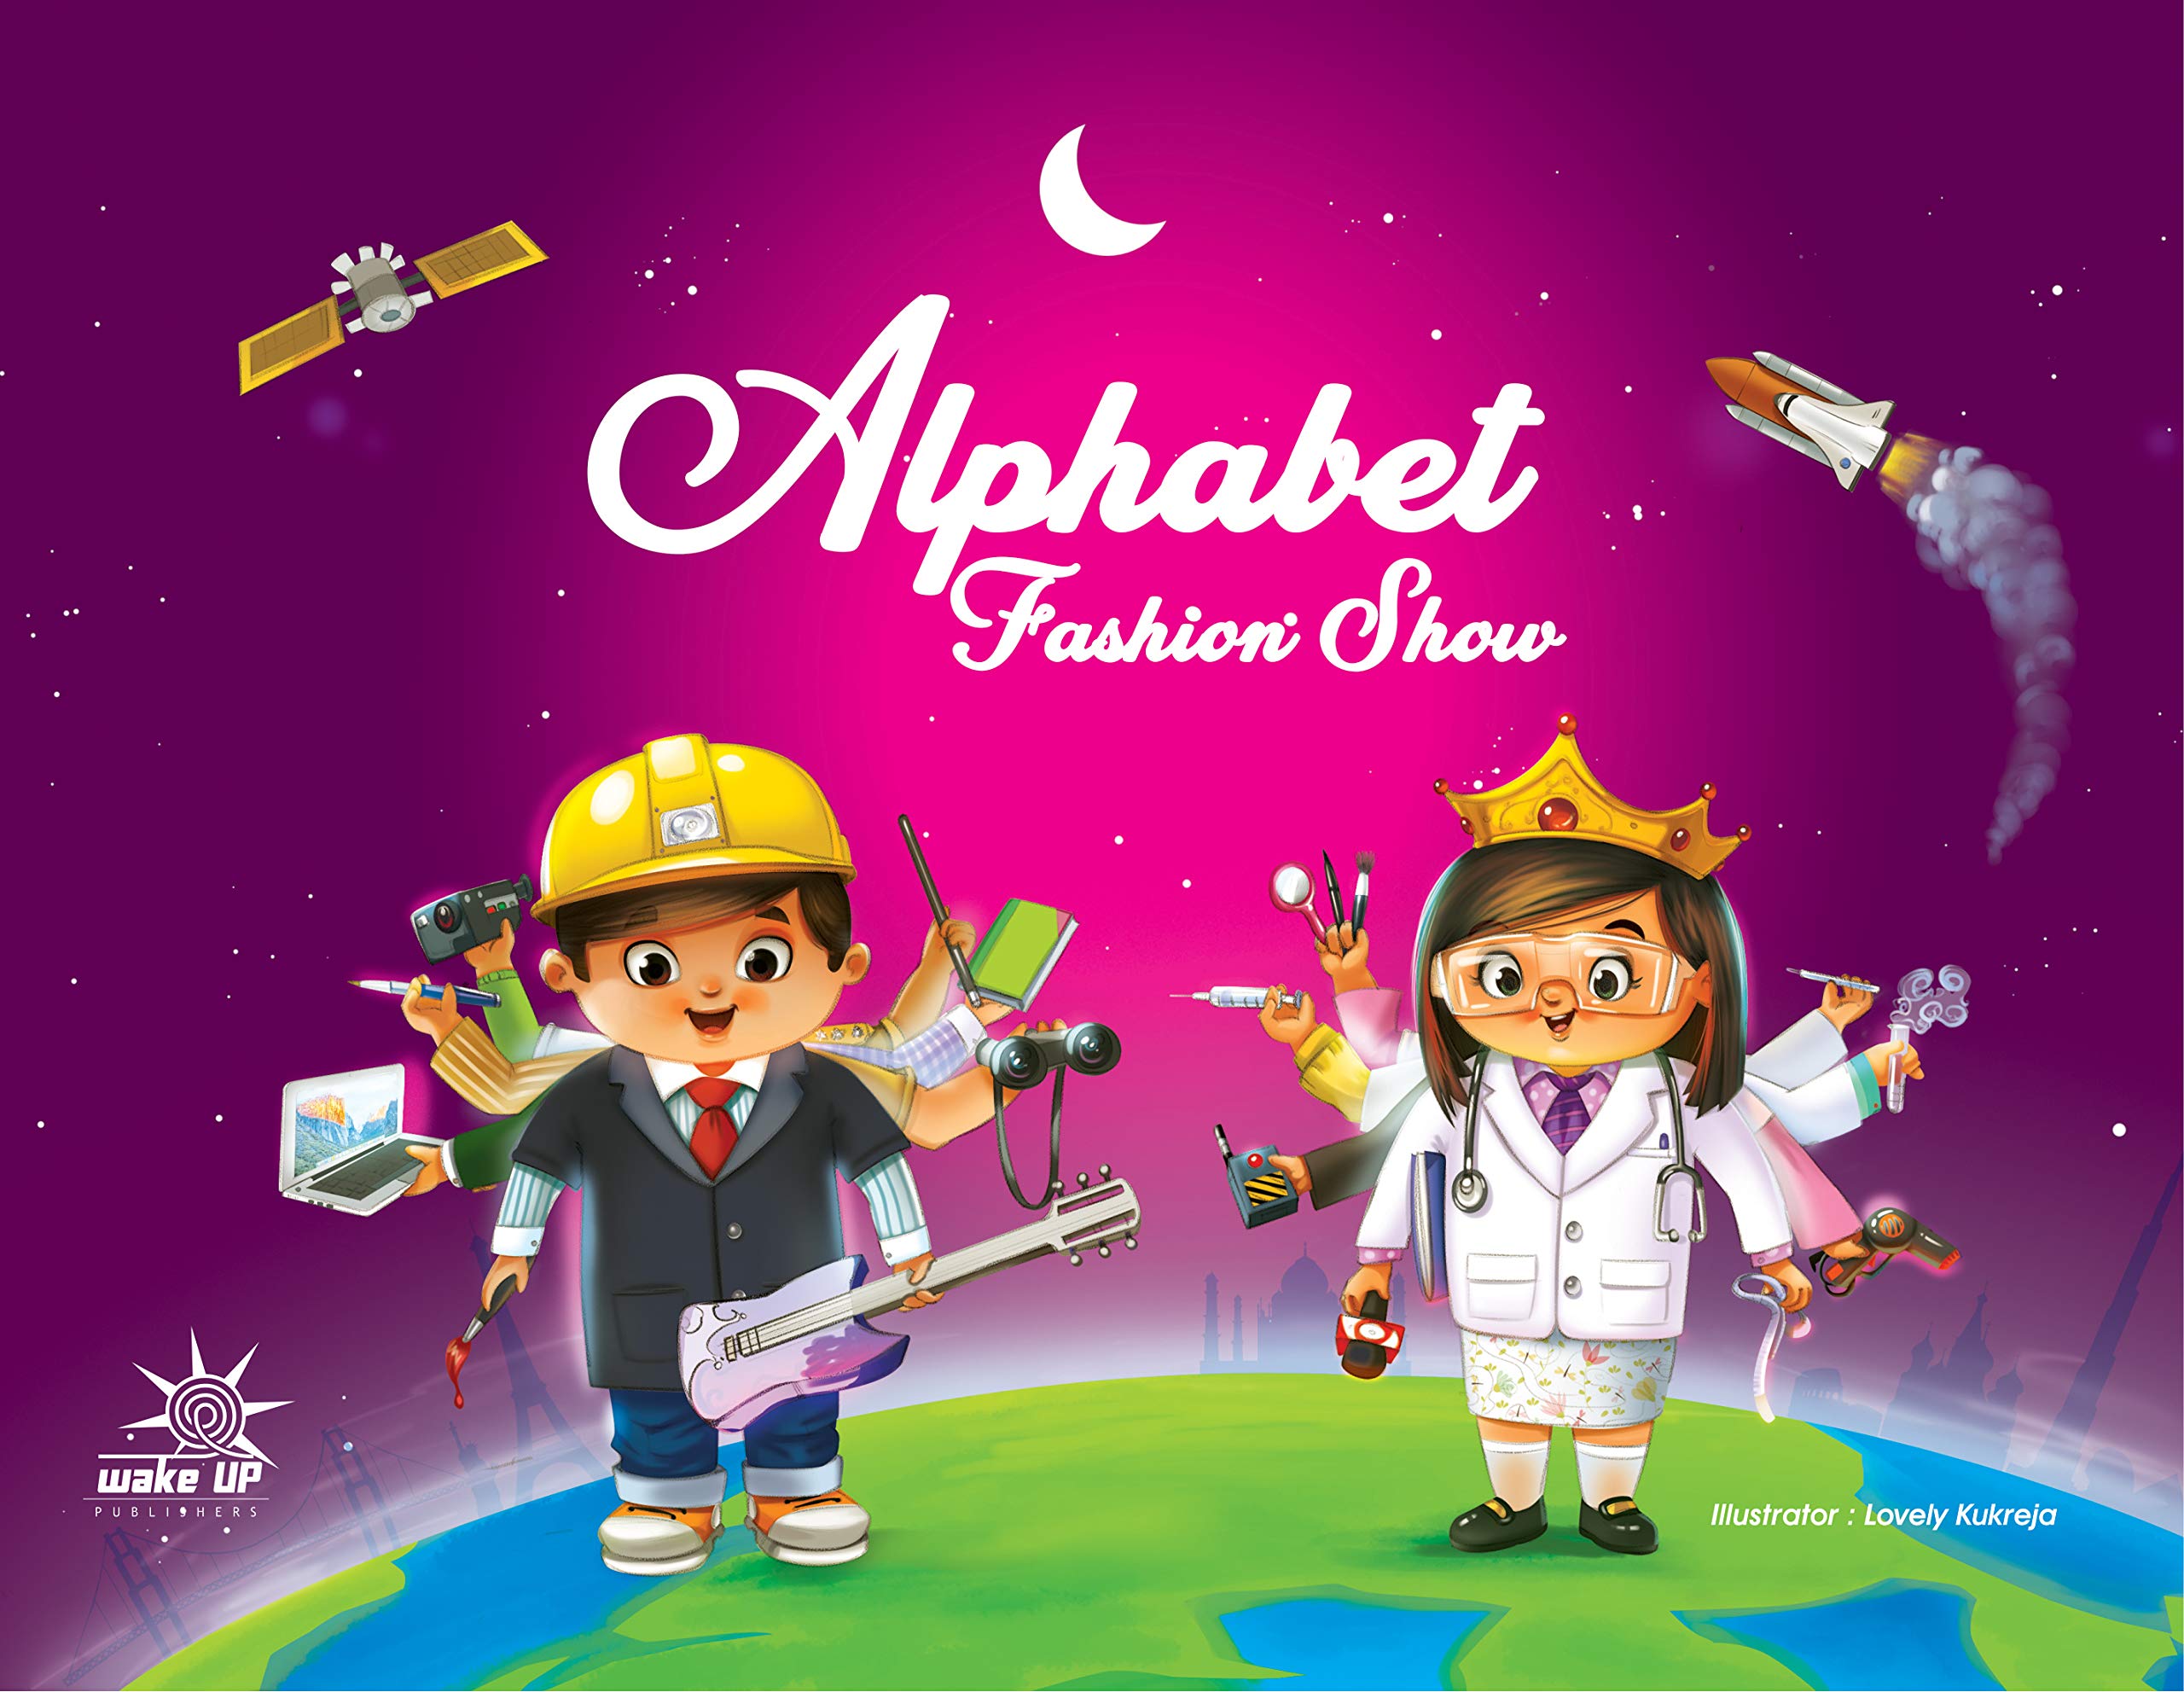 Wake Up - Alphabet Fashion Show